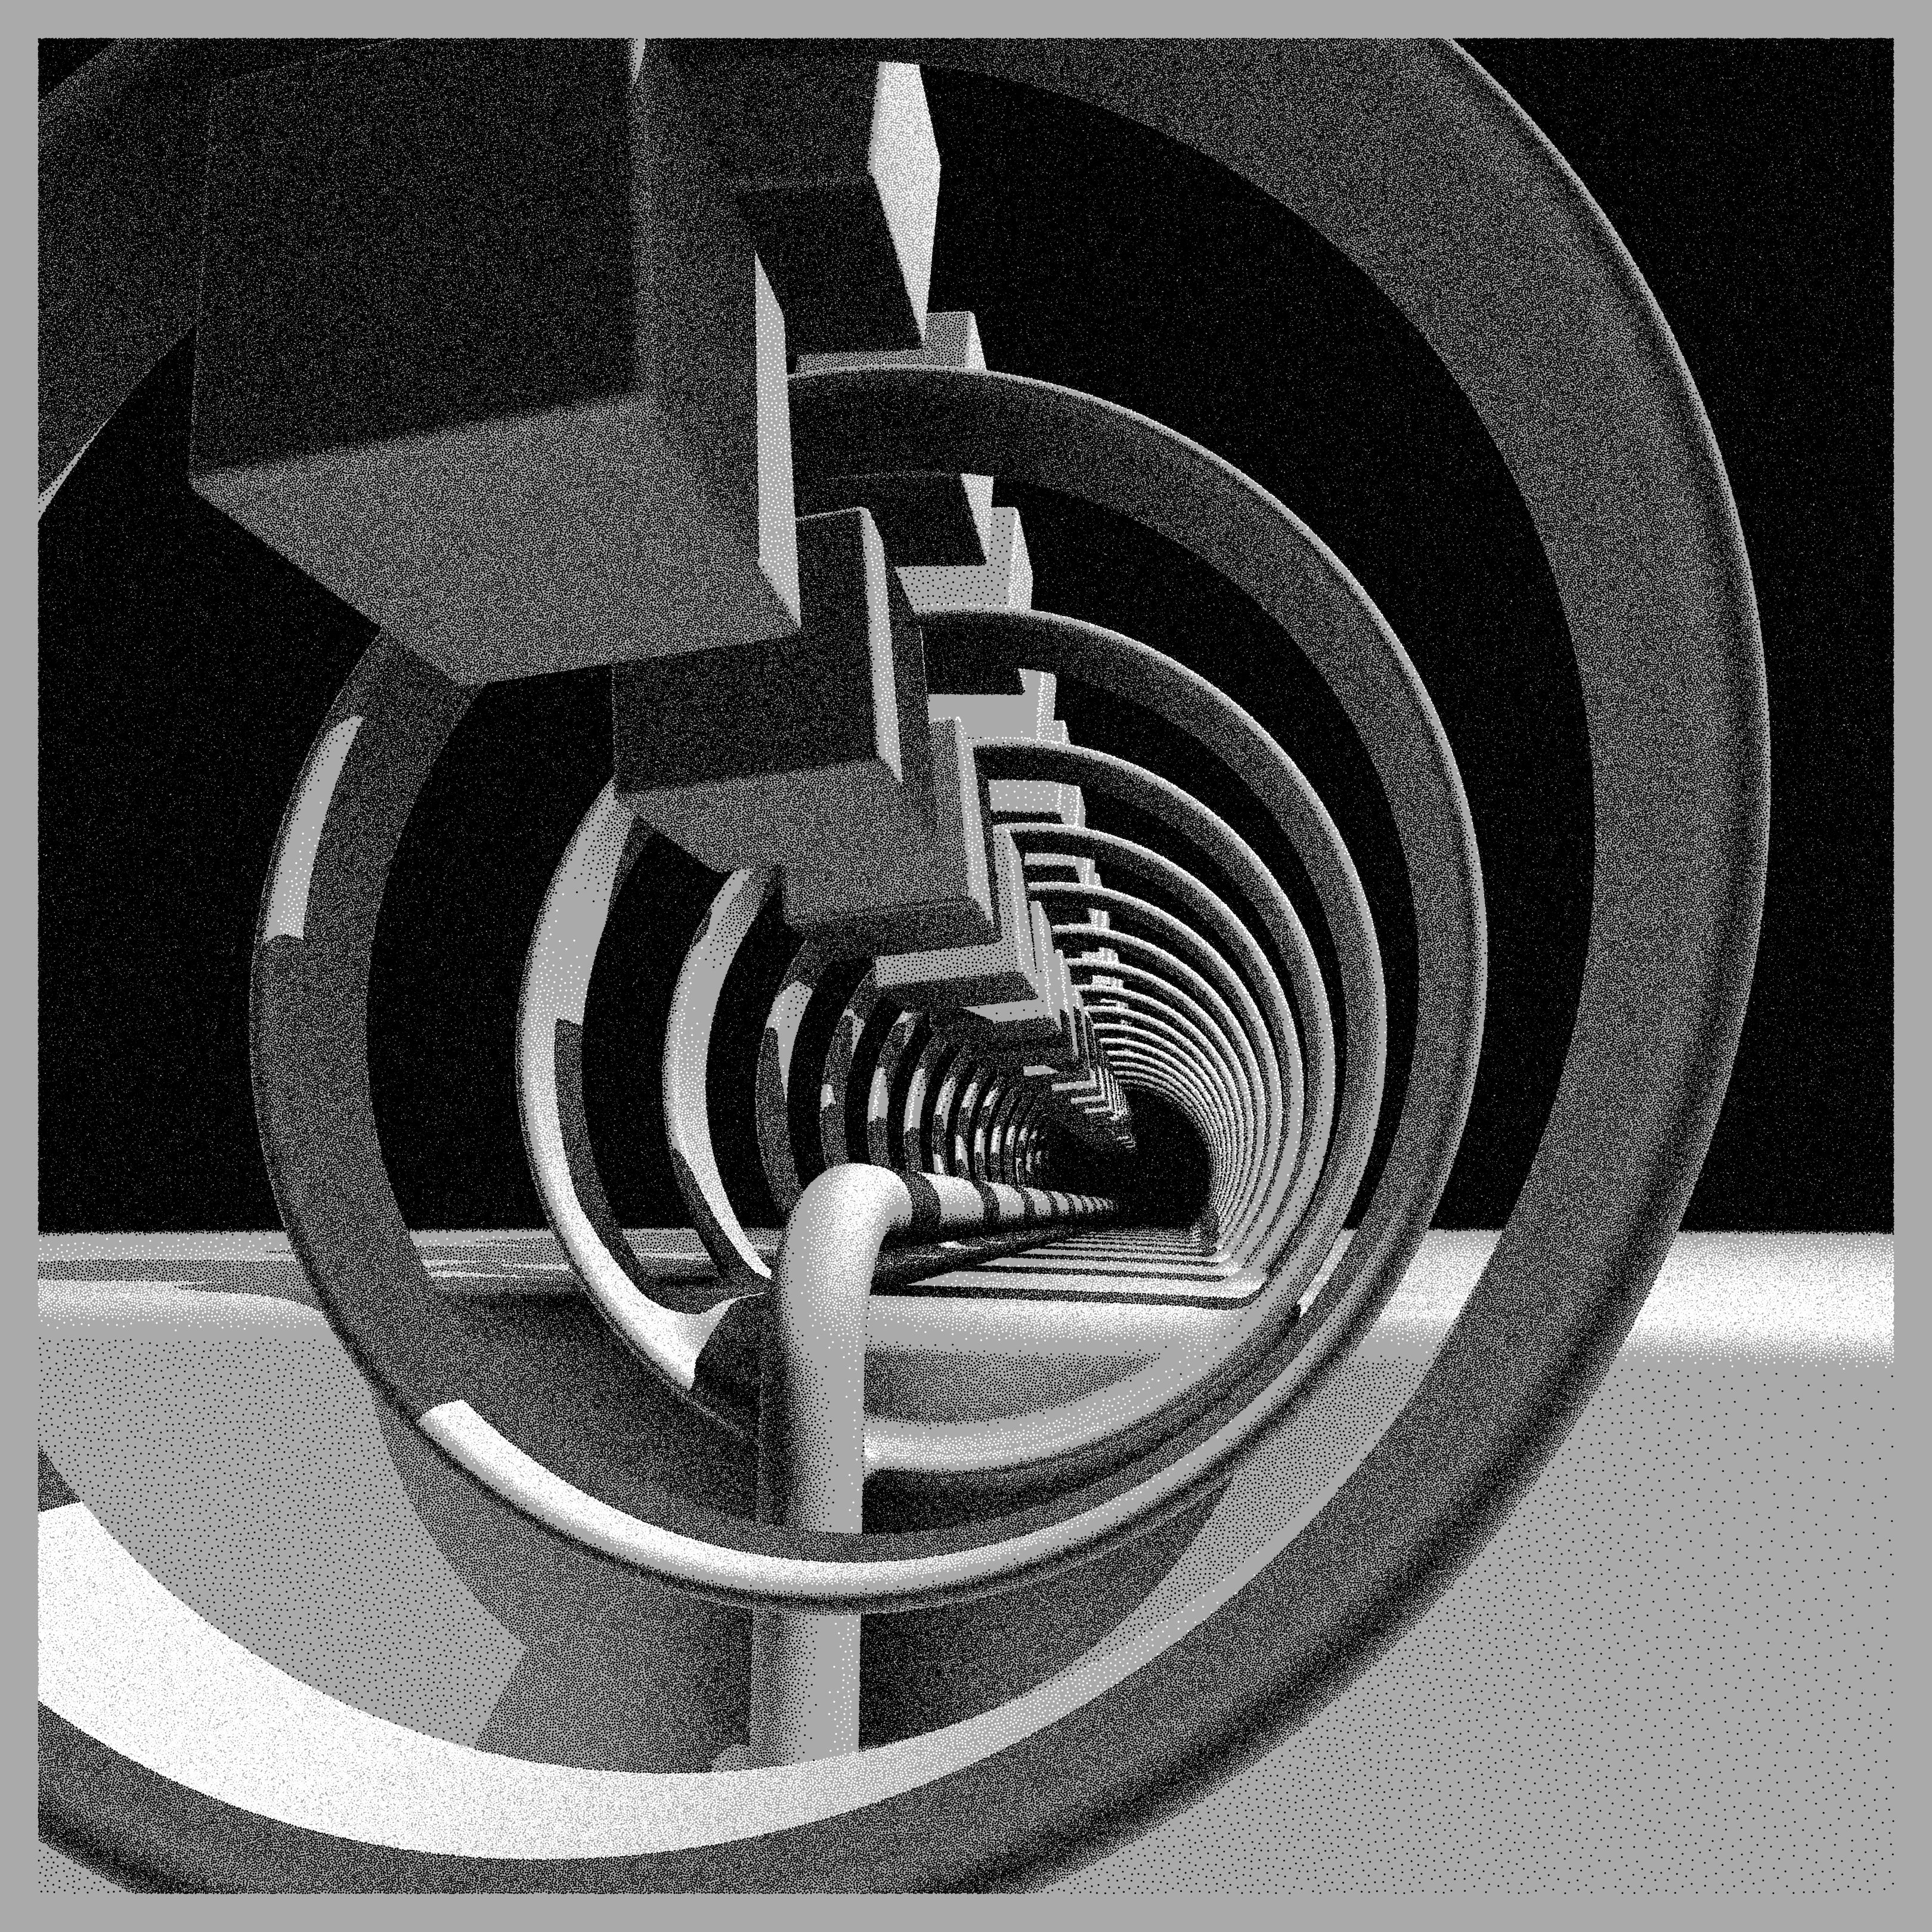 piter pasma art, a cube and a tube going through a spiral